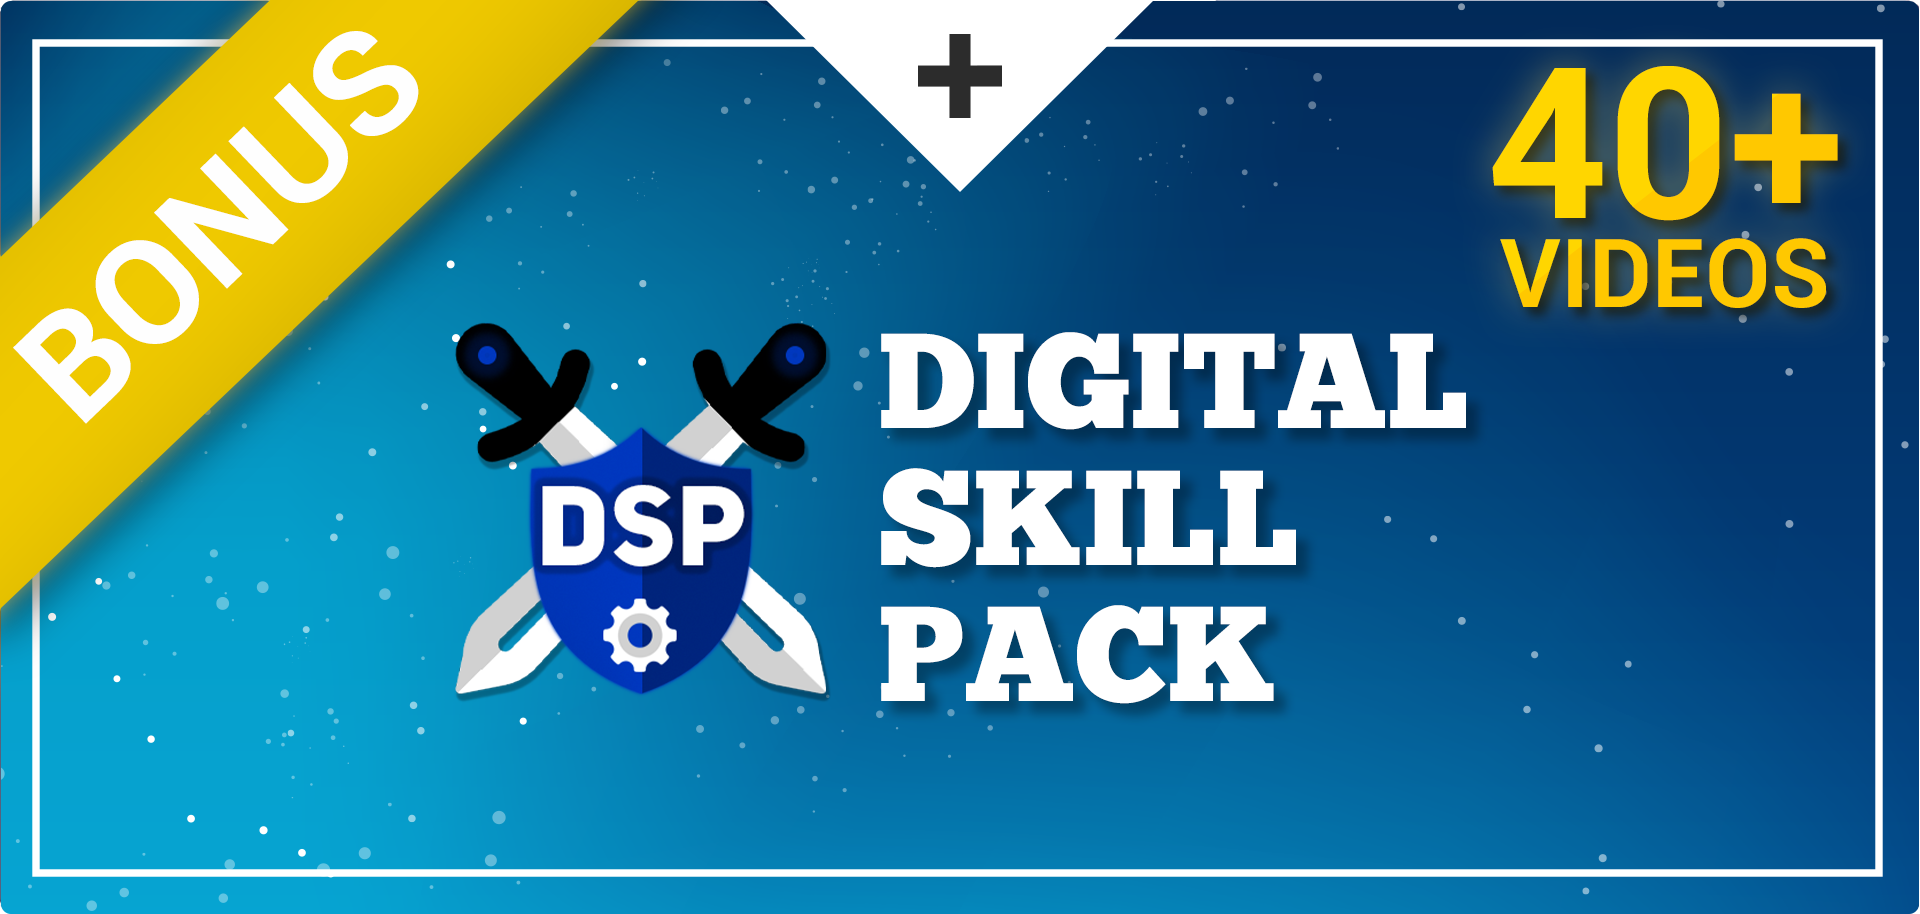 DSP - Digital Skill Pack